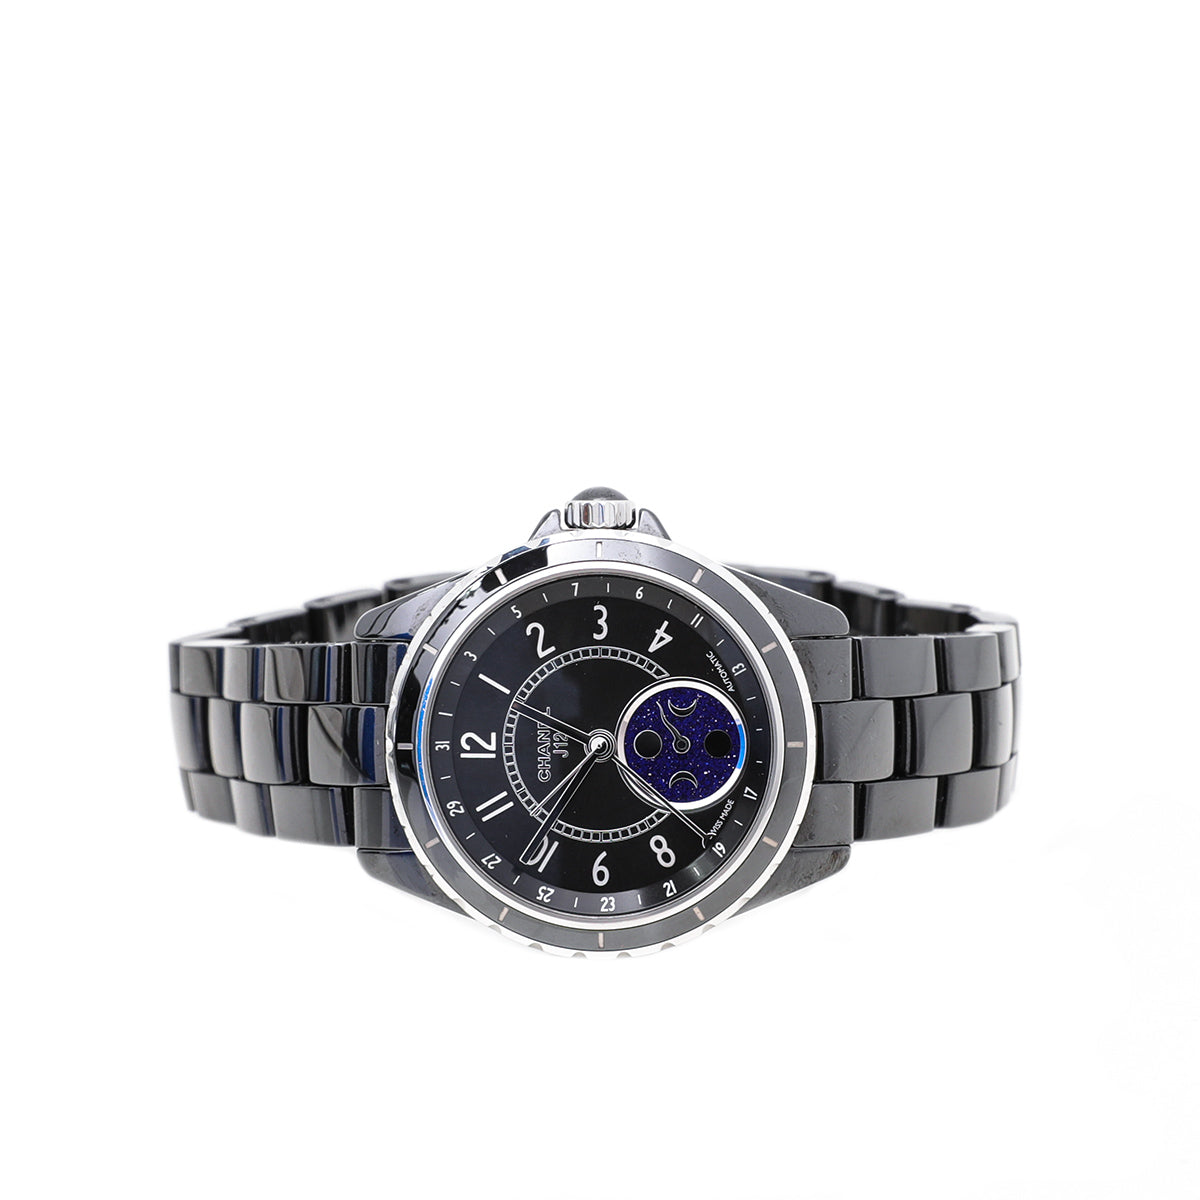 Chanel Black Ceramic J12 Moonphase 38mm Watch